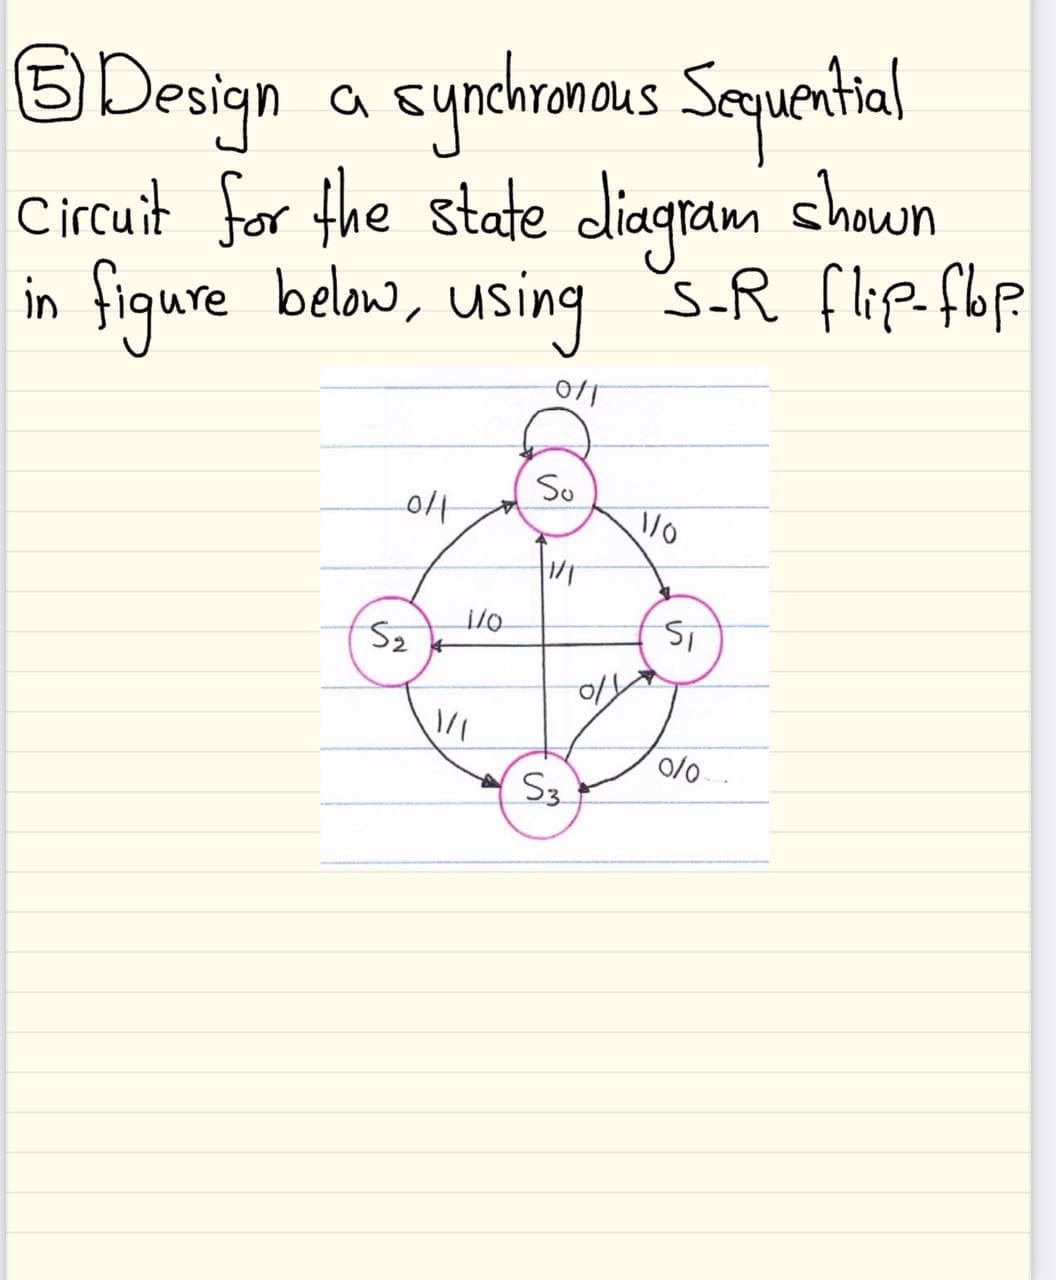 BDesign a cynchramaus Sequential
syncramaus Sequental
Circuit for the state diaqram chawn
in figure below, using s.R flip.fbp
So
Sz
0/0
S3
